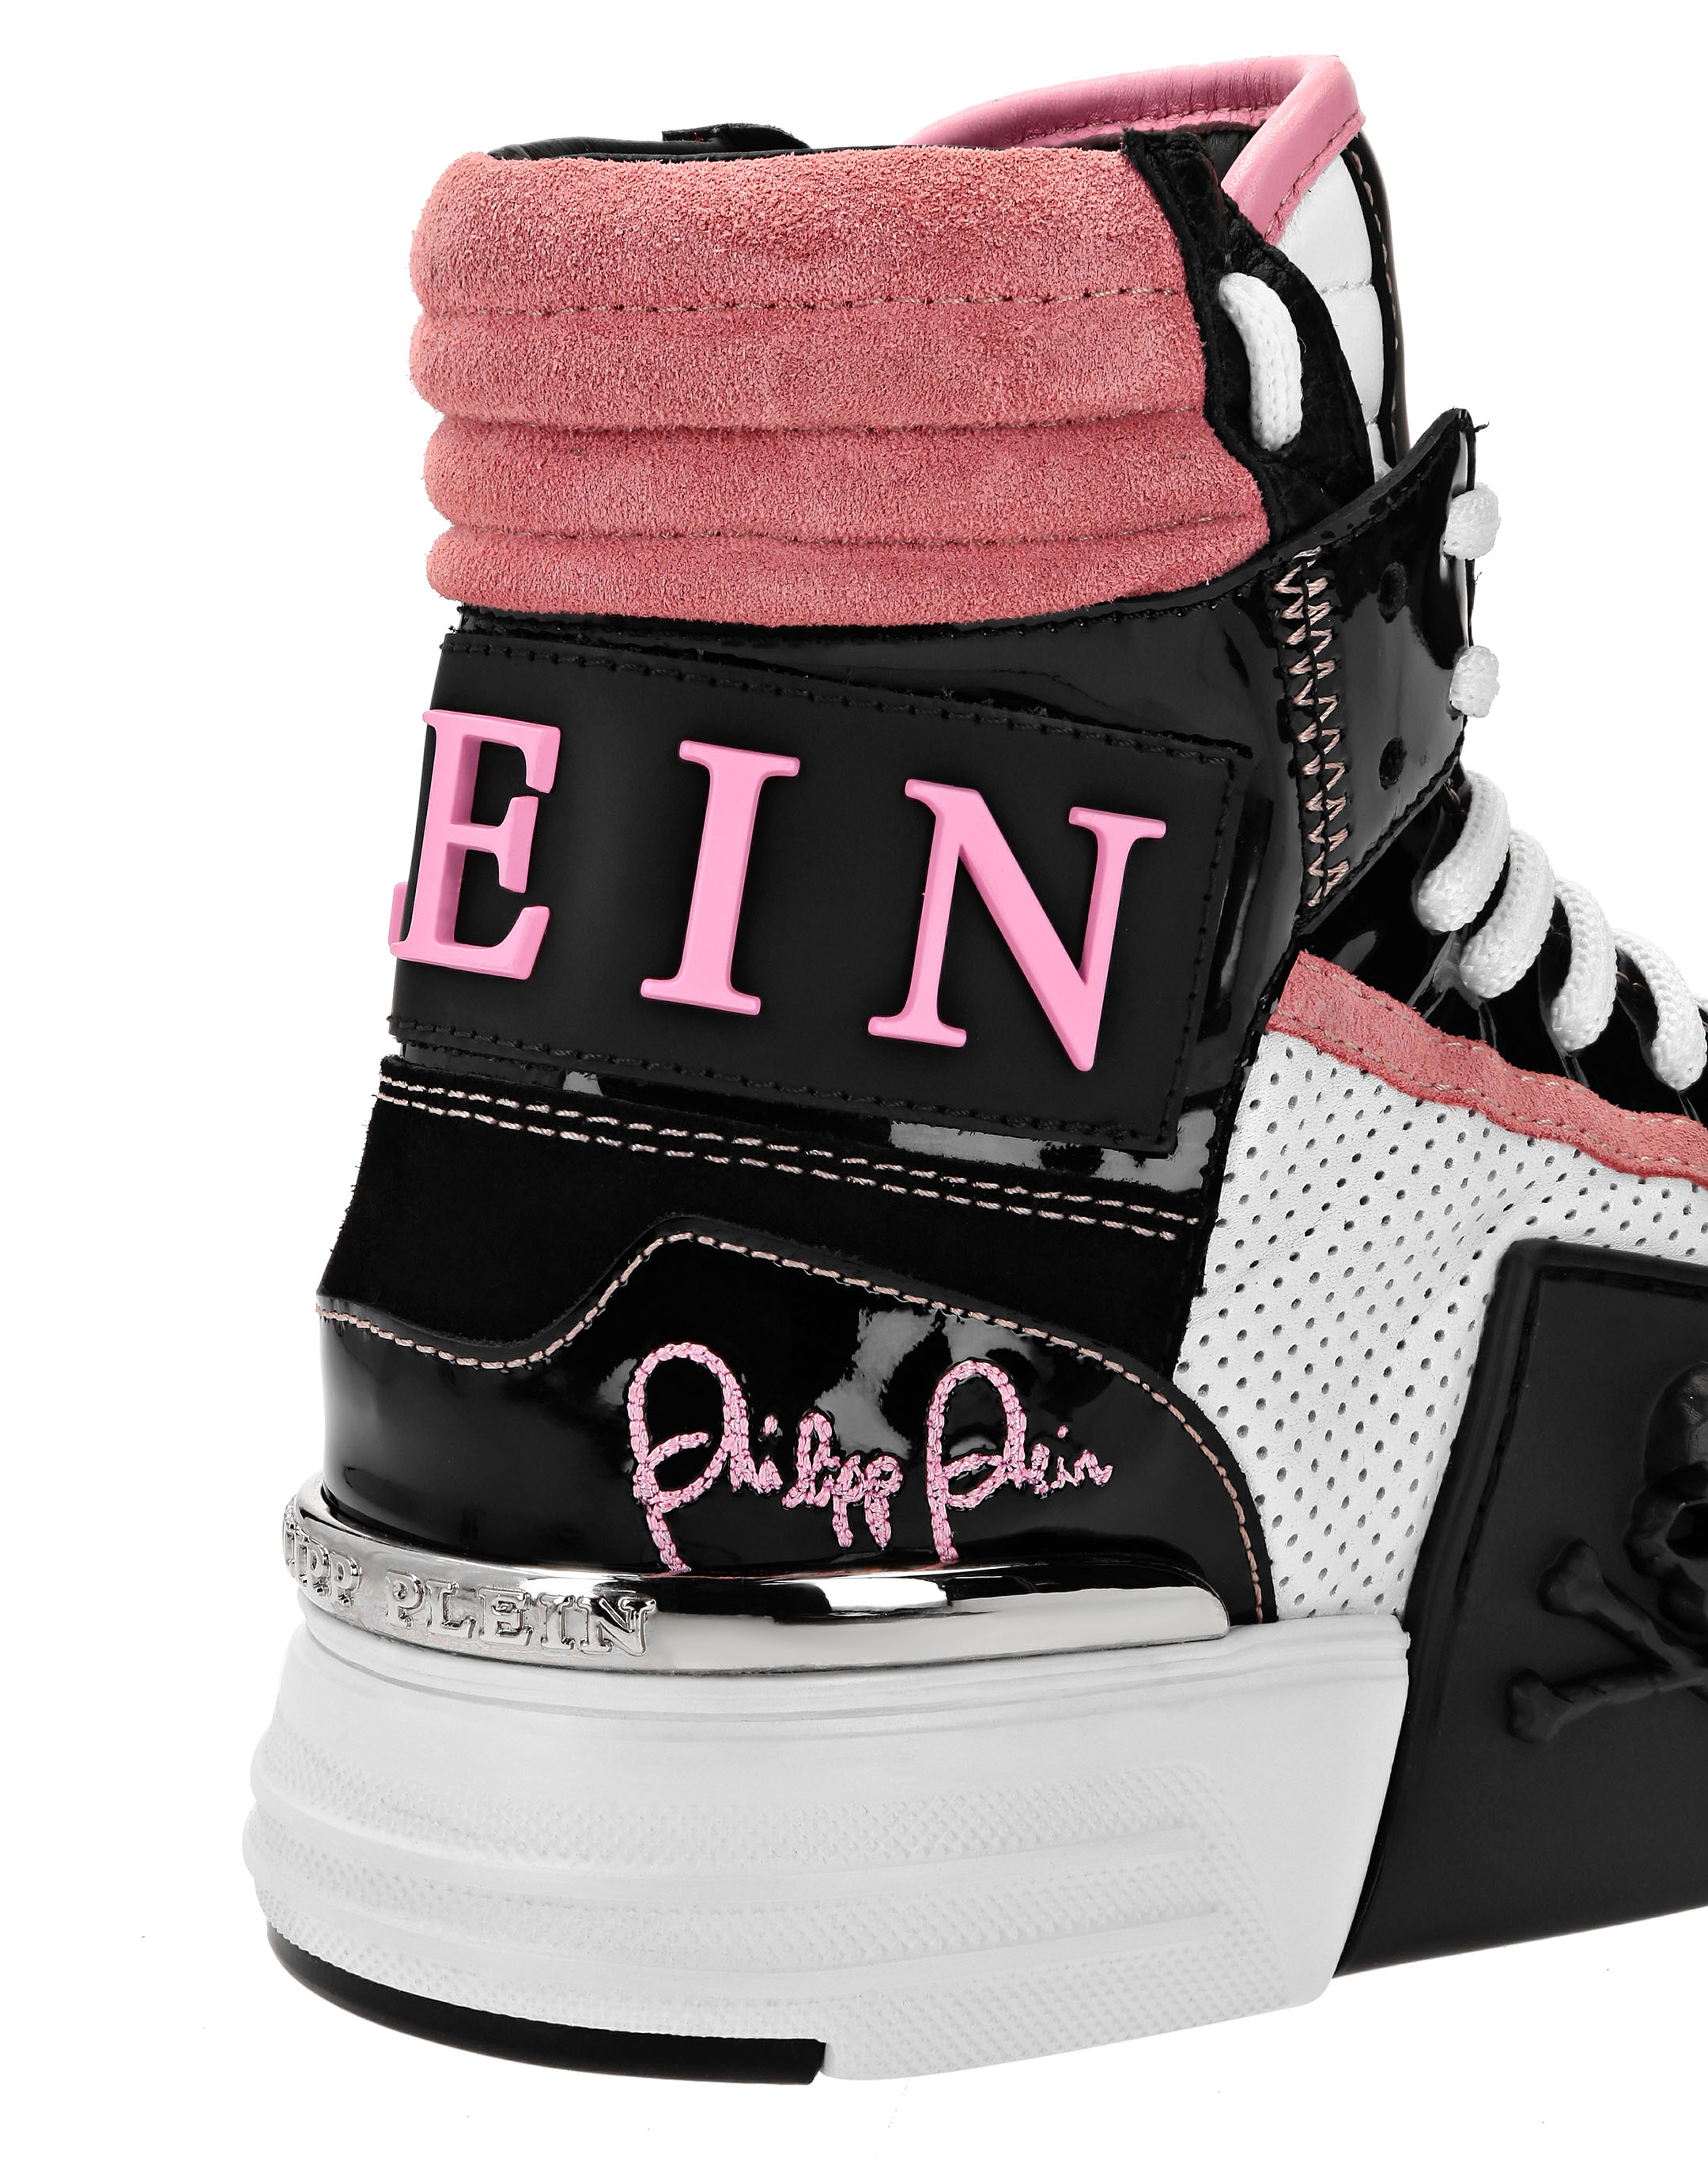 Philipp Plein Skull High-Top Sneakers - Pink